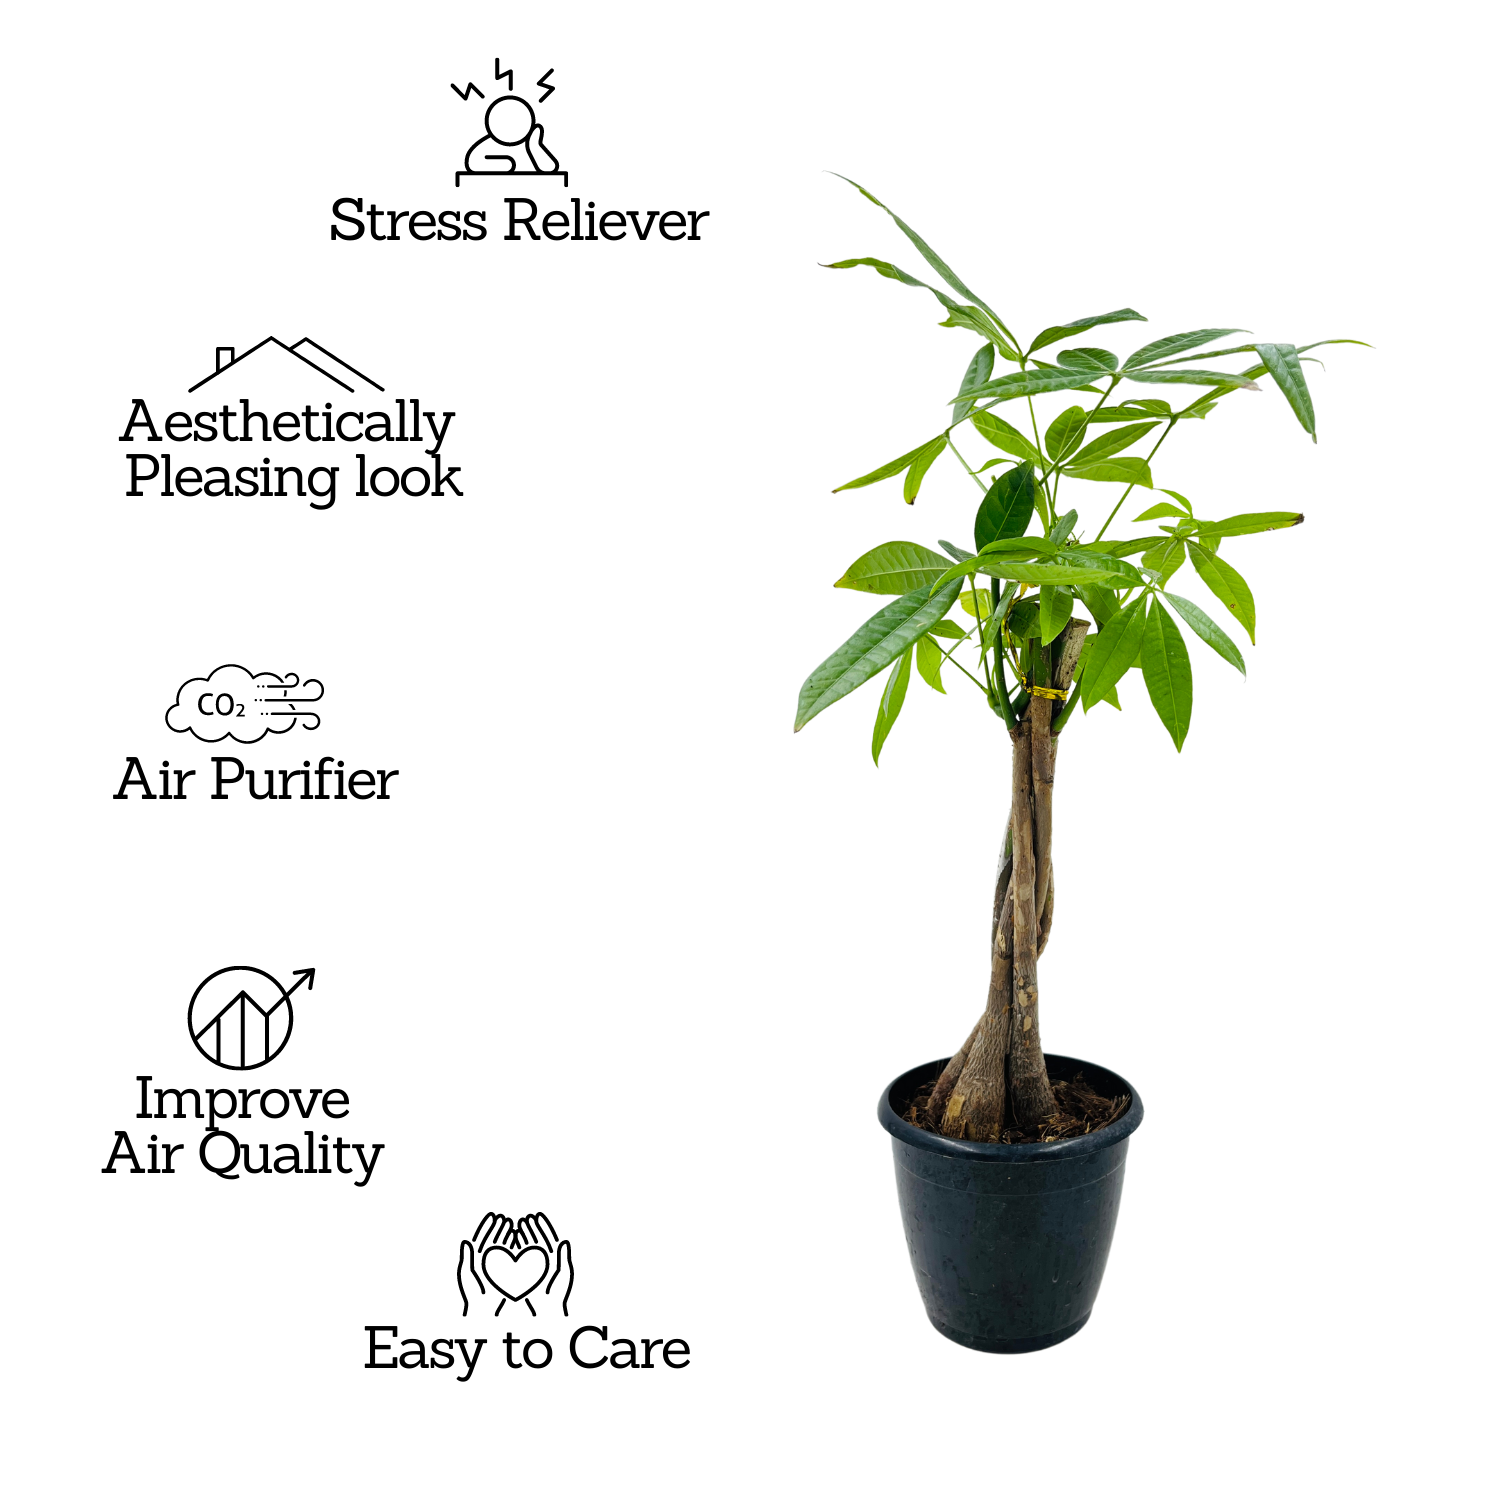 Pachira Money Plant Tree Braided | Malabar Chestnut (Pachira aquatica)- Live Plant in 12cm Pot (Home & Garden)